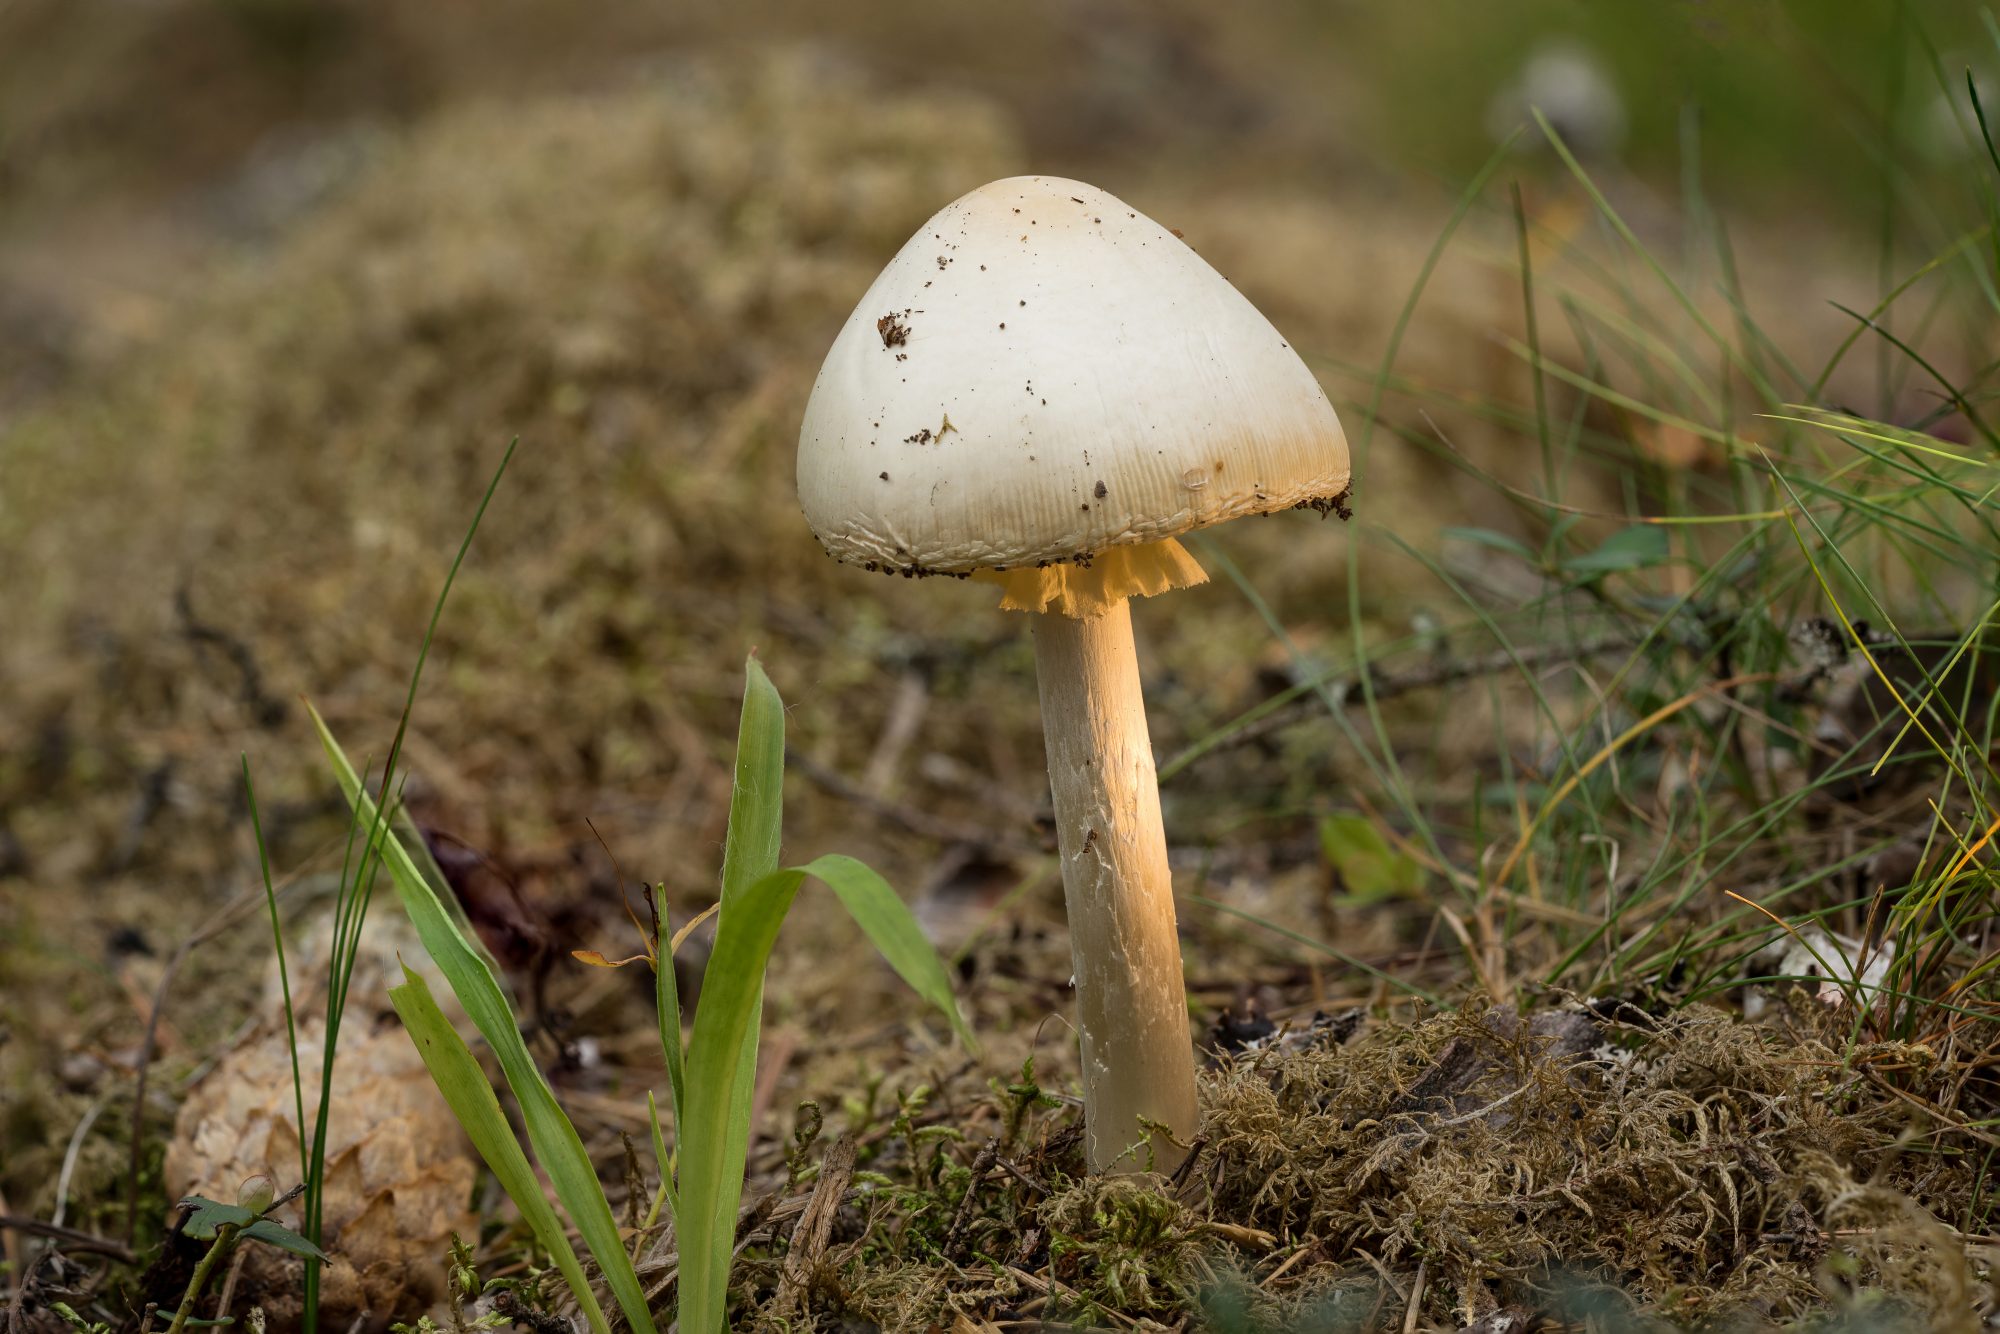 Amanita virosa or Destroying Angel mushroom - white mushroom in natural environment